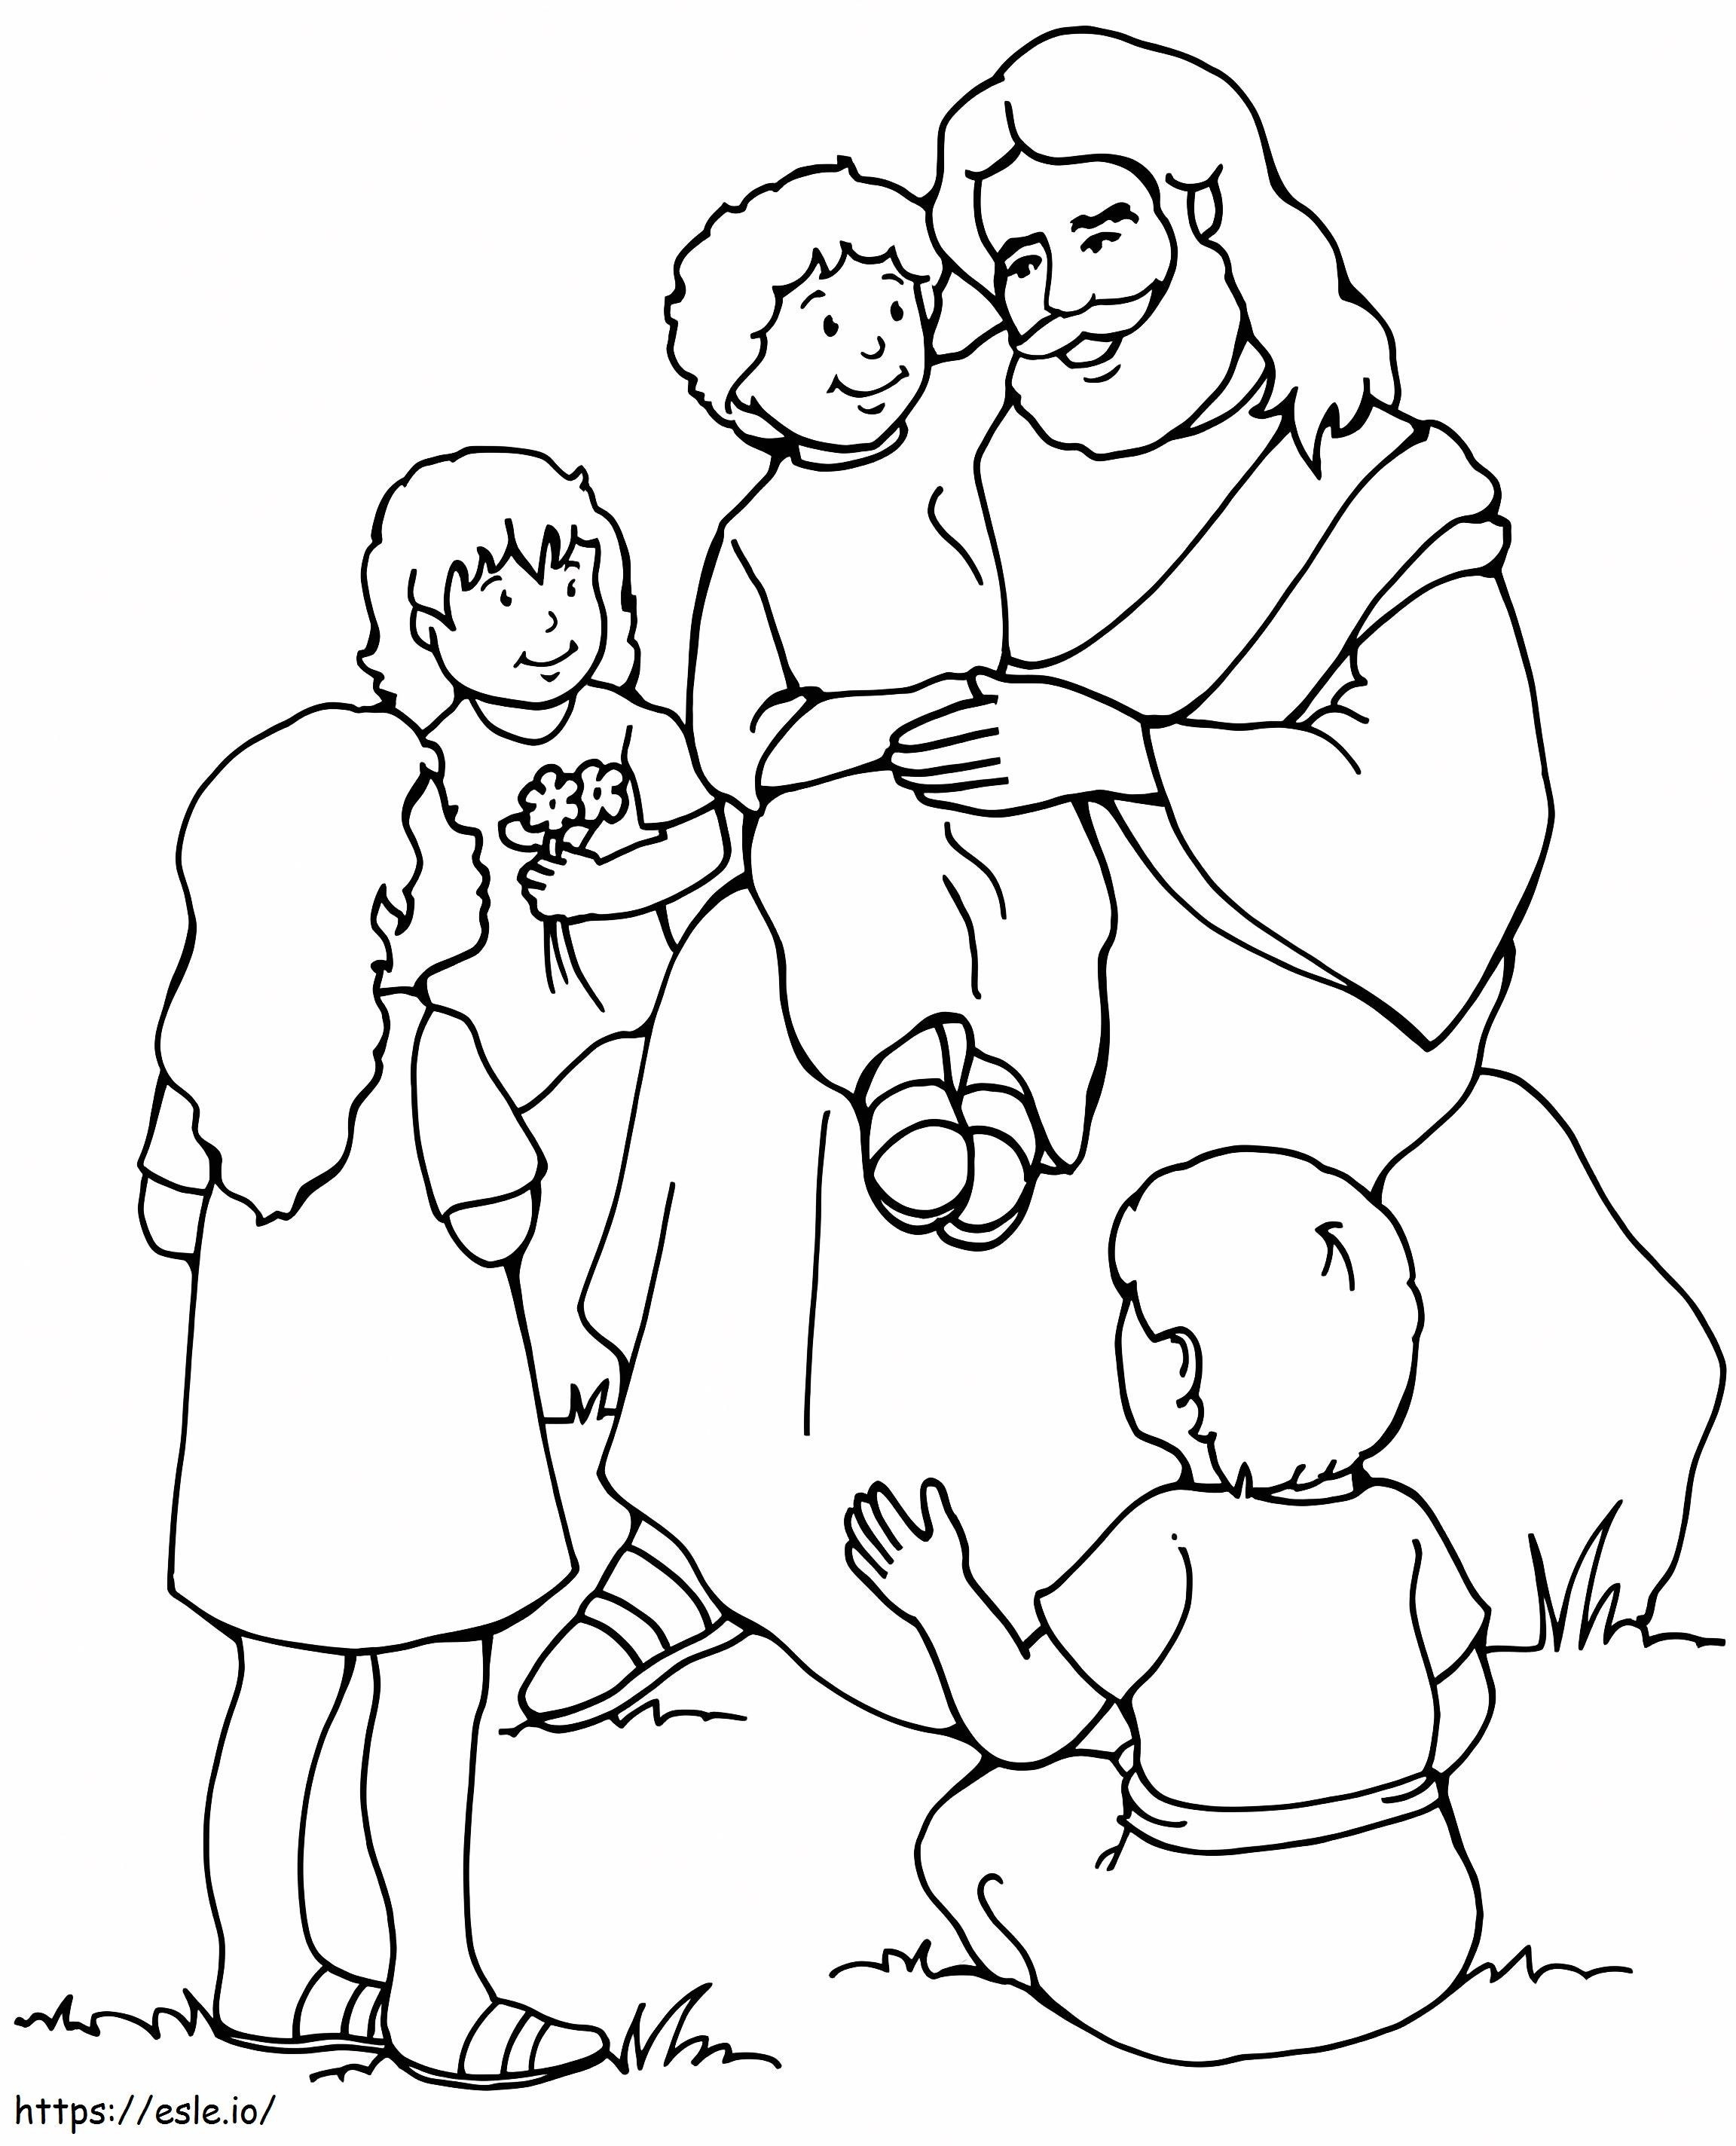 Jeesus ja Lapset värityskuva